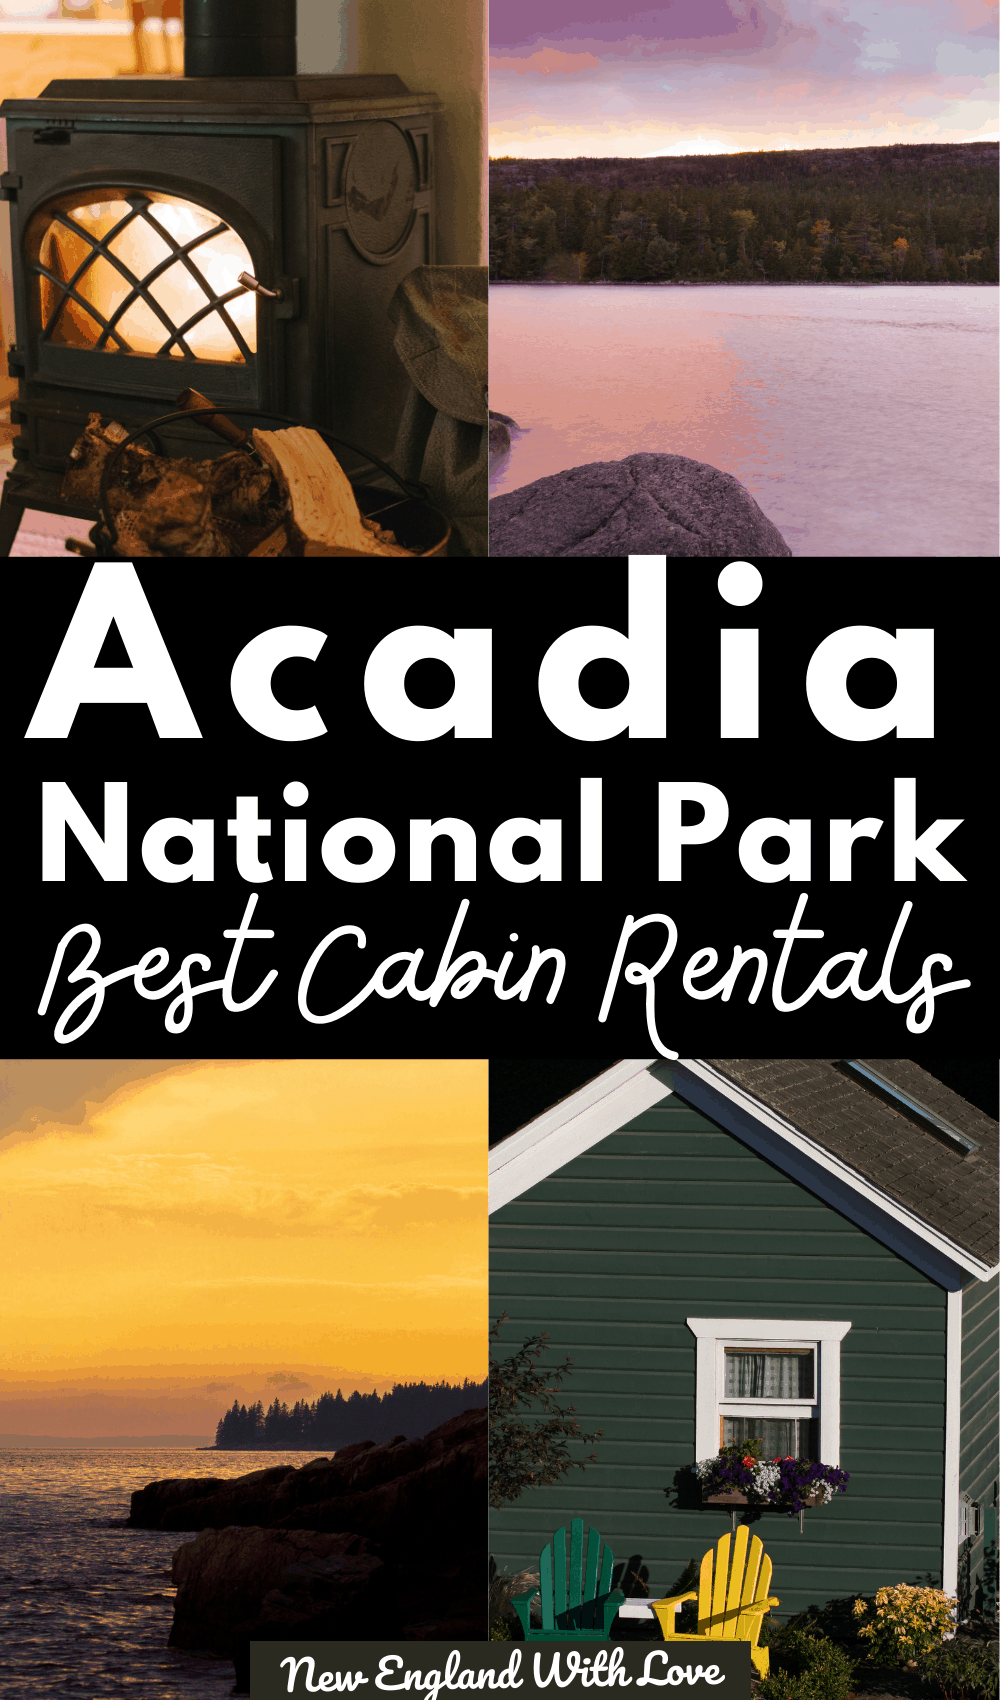 Pinterest graphic reading "Acadia National Park Best Cabin Rentals"